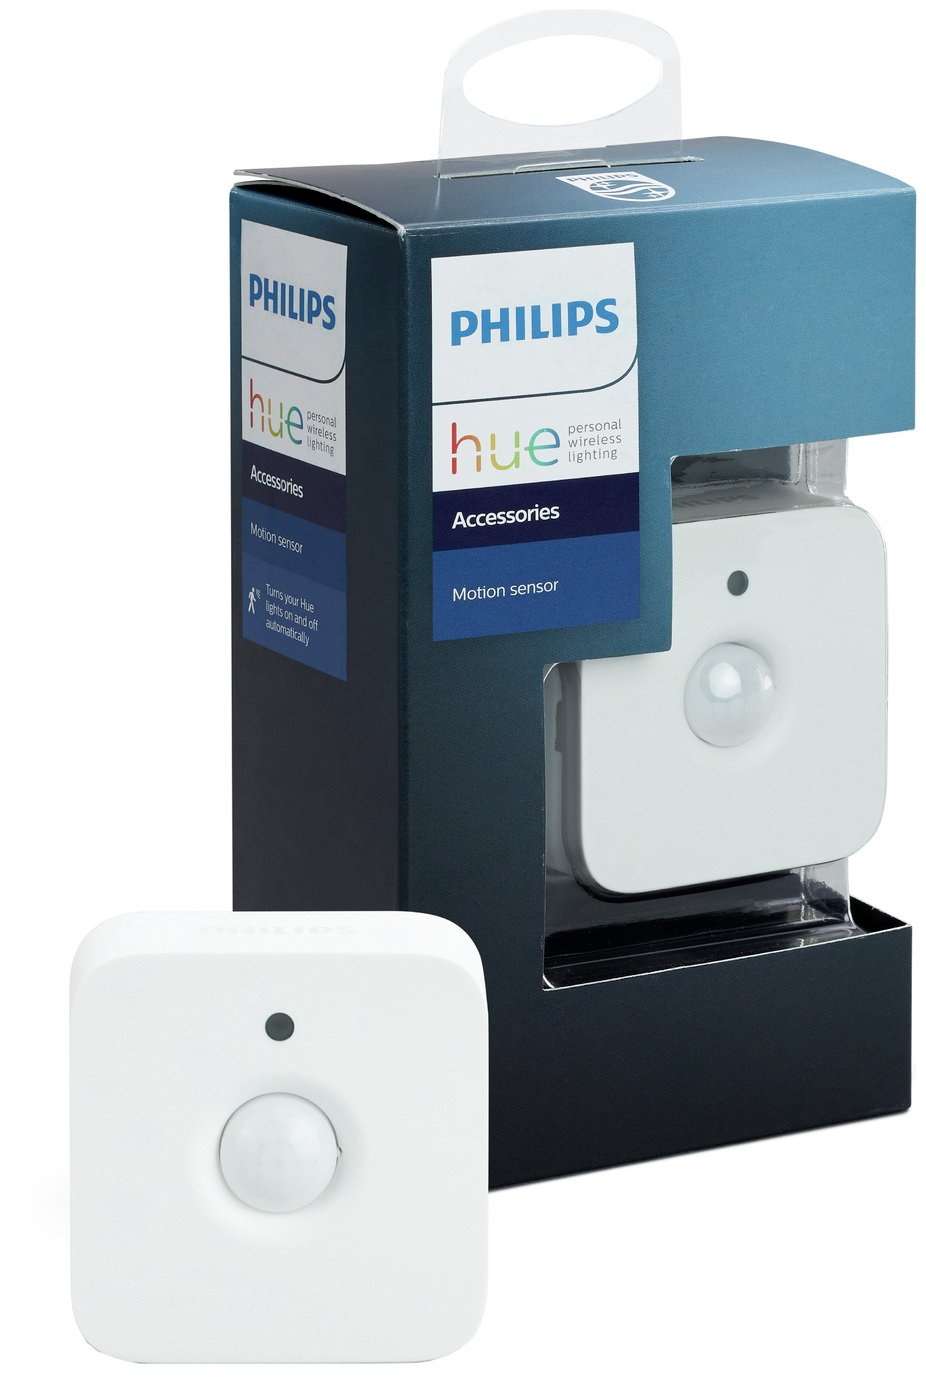 Philips Hue Motion Sensor.